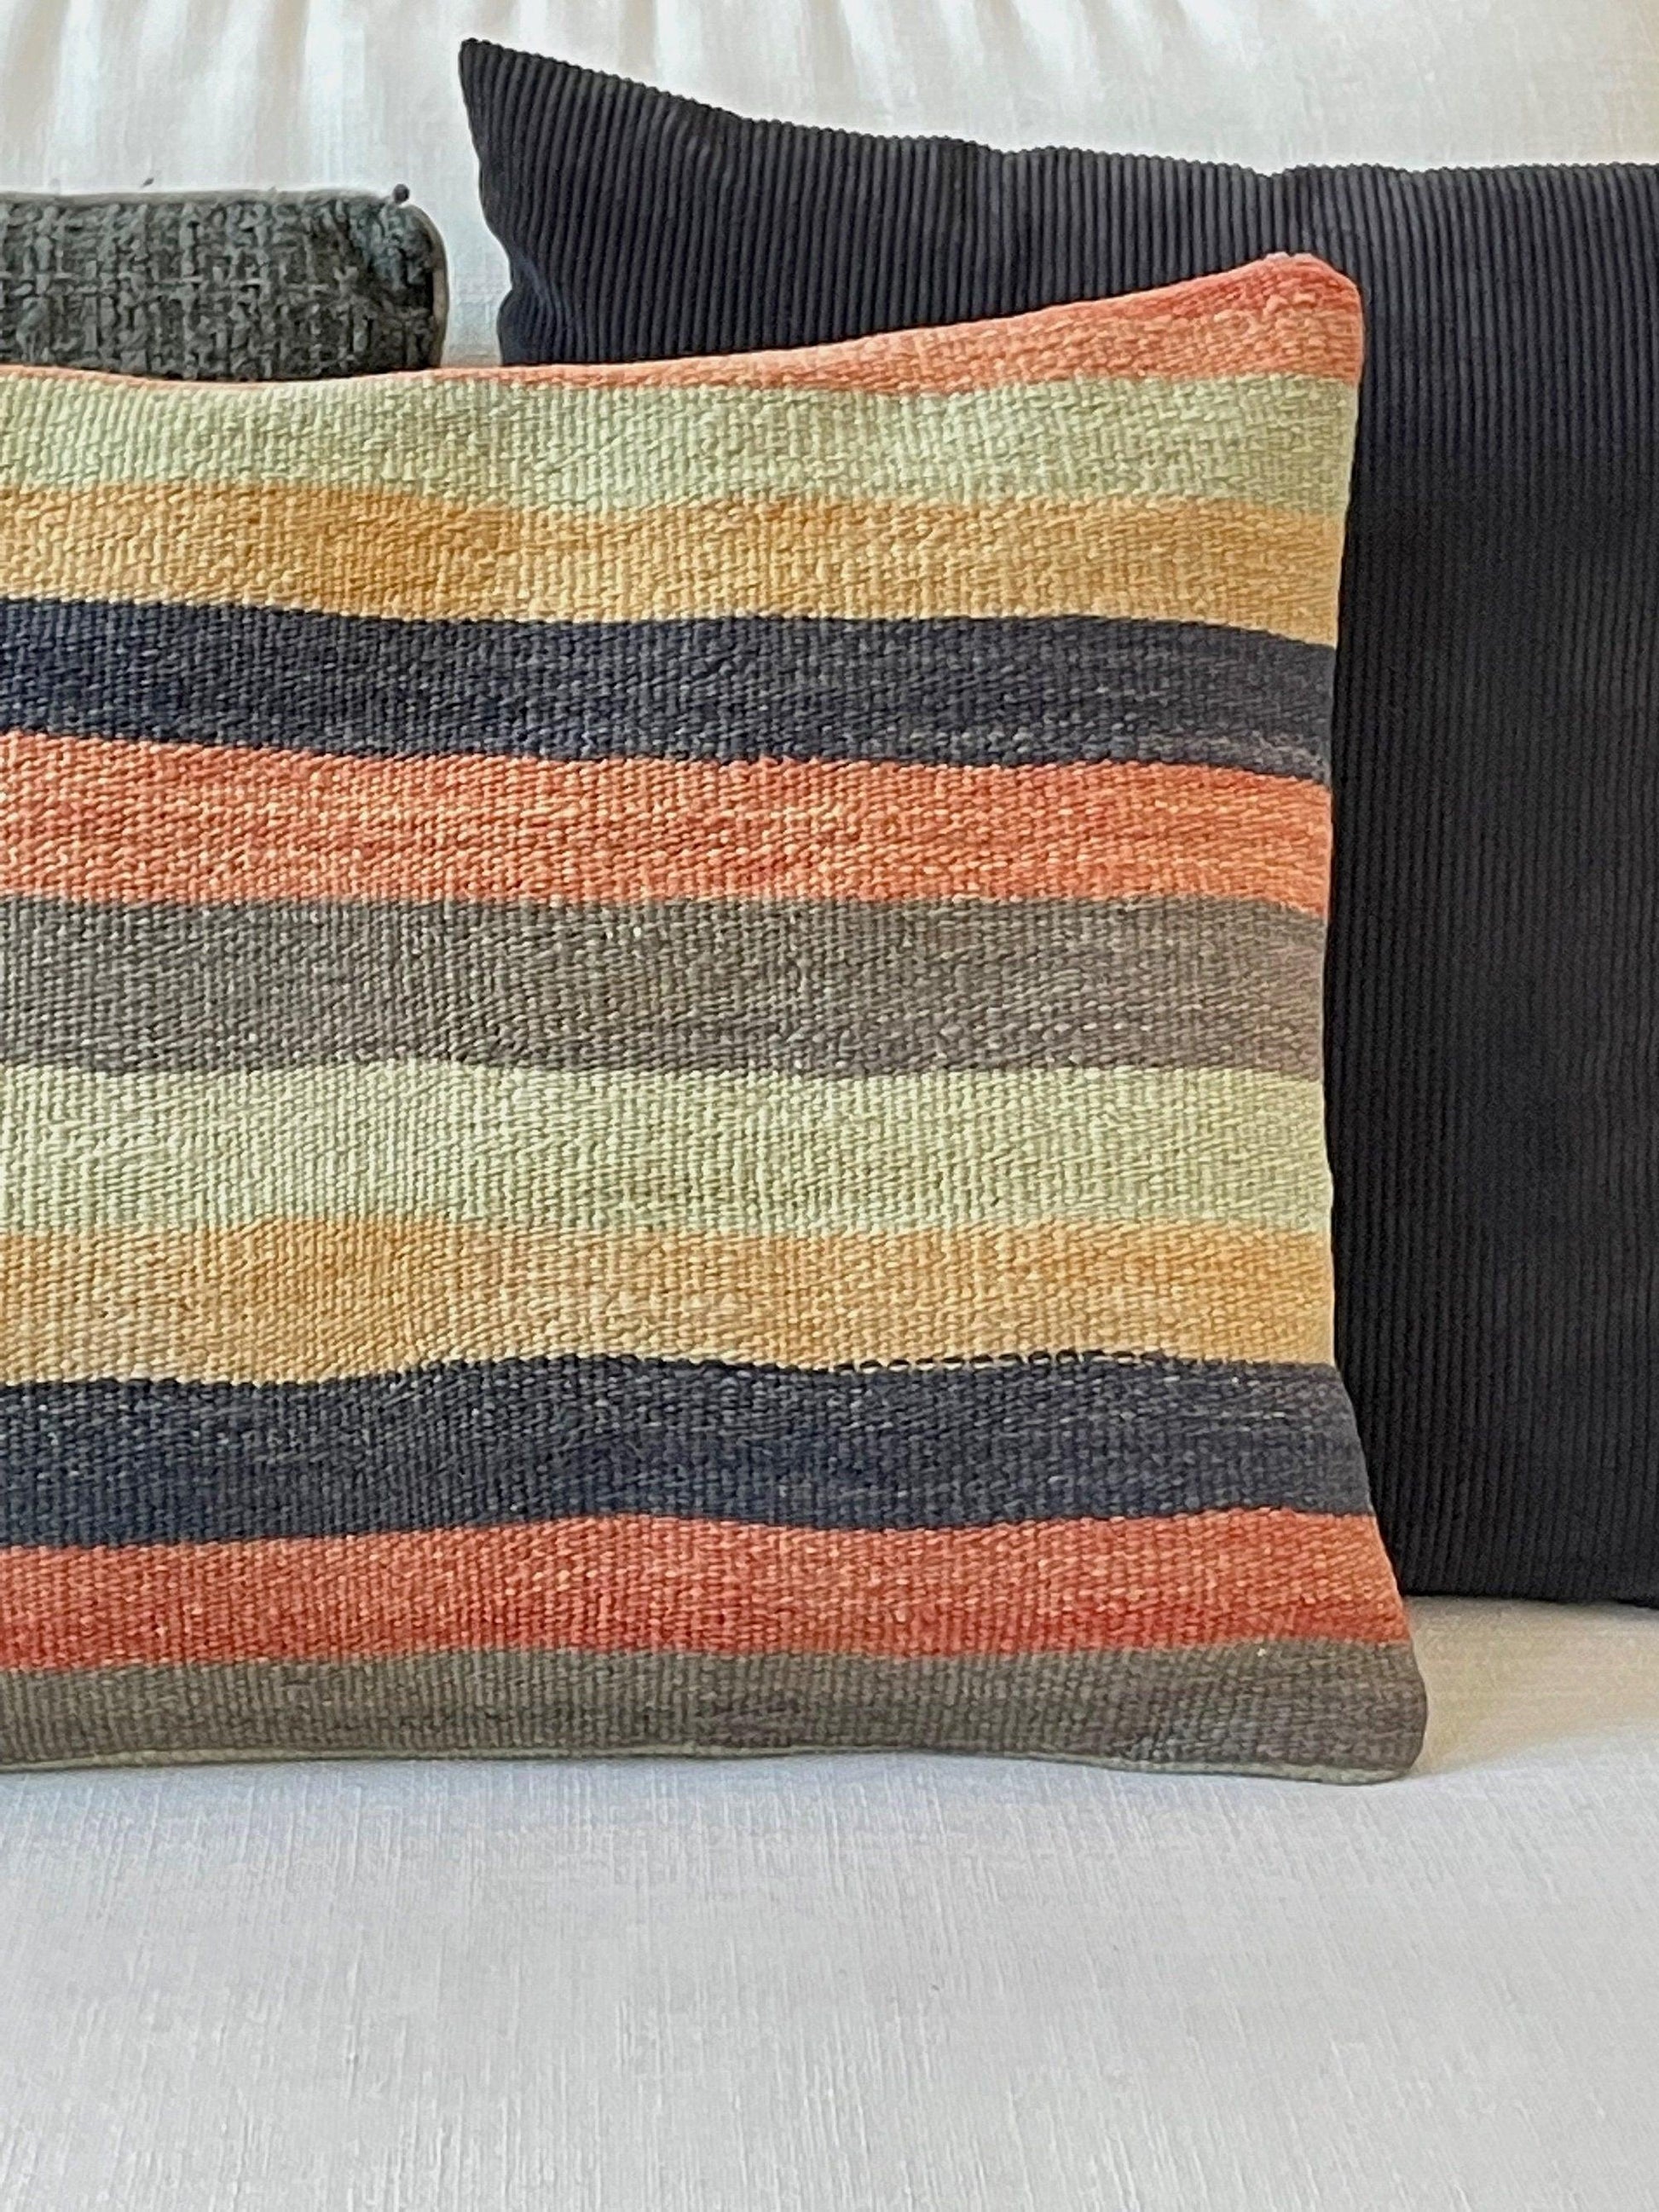 Vintage Kilim Cushion (16x24) | Indie room decor | Long Lumbar Pillow | Outdoor Lounge Decor | Unique Home gifts | Meditation Cushion - BeachPerfect.de